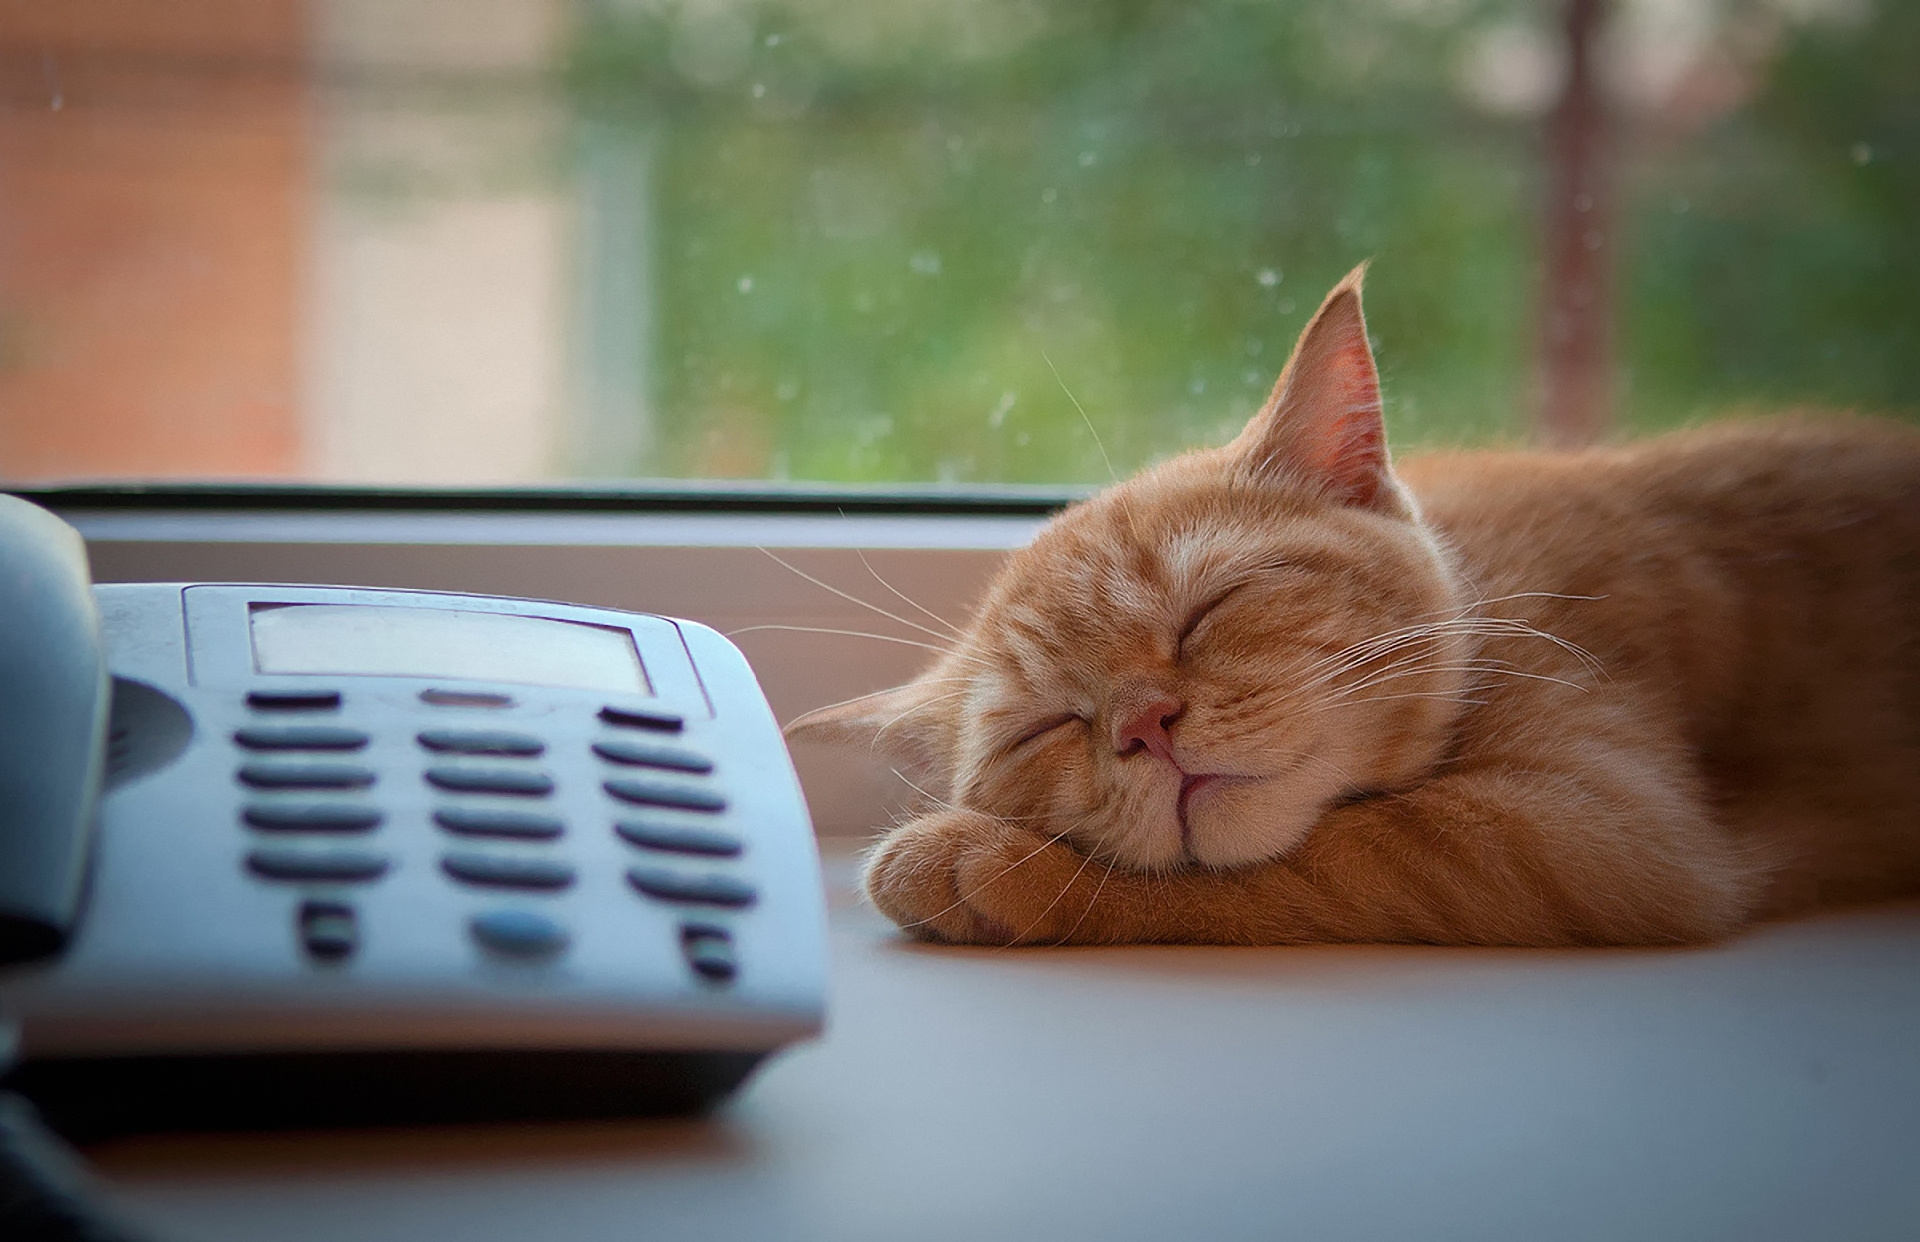 animals, cat, sleep, dream, window sill, windowsill, telephone, expectation, waiting